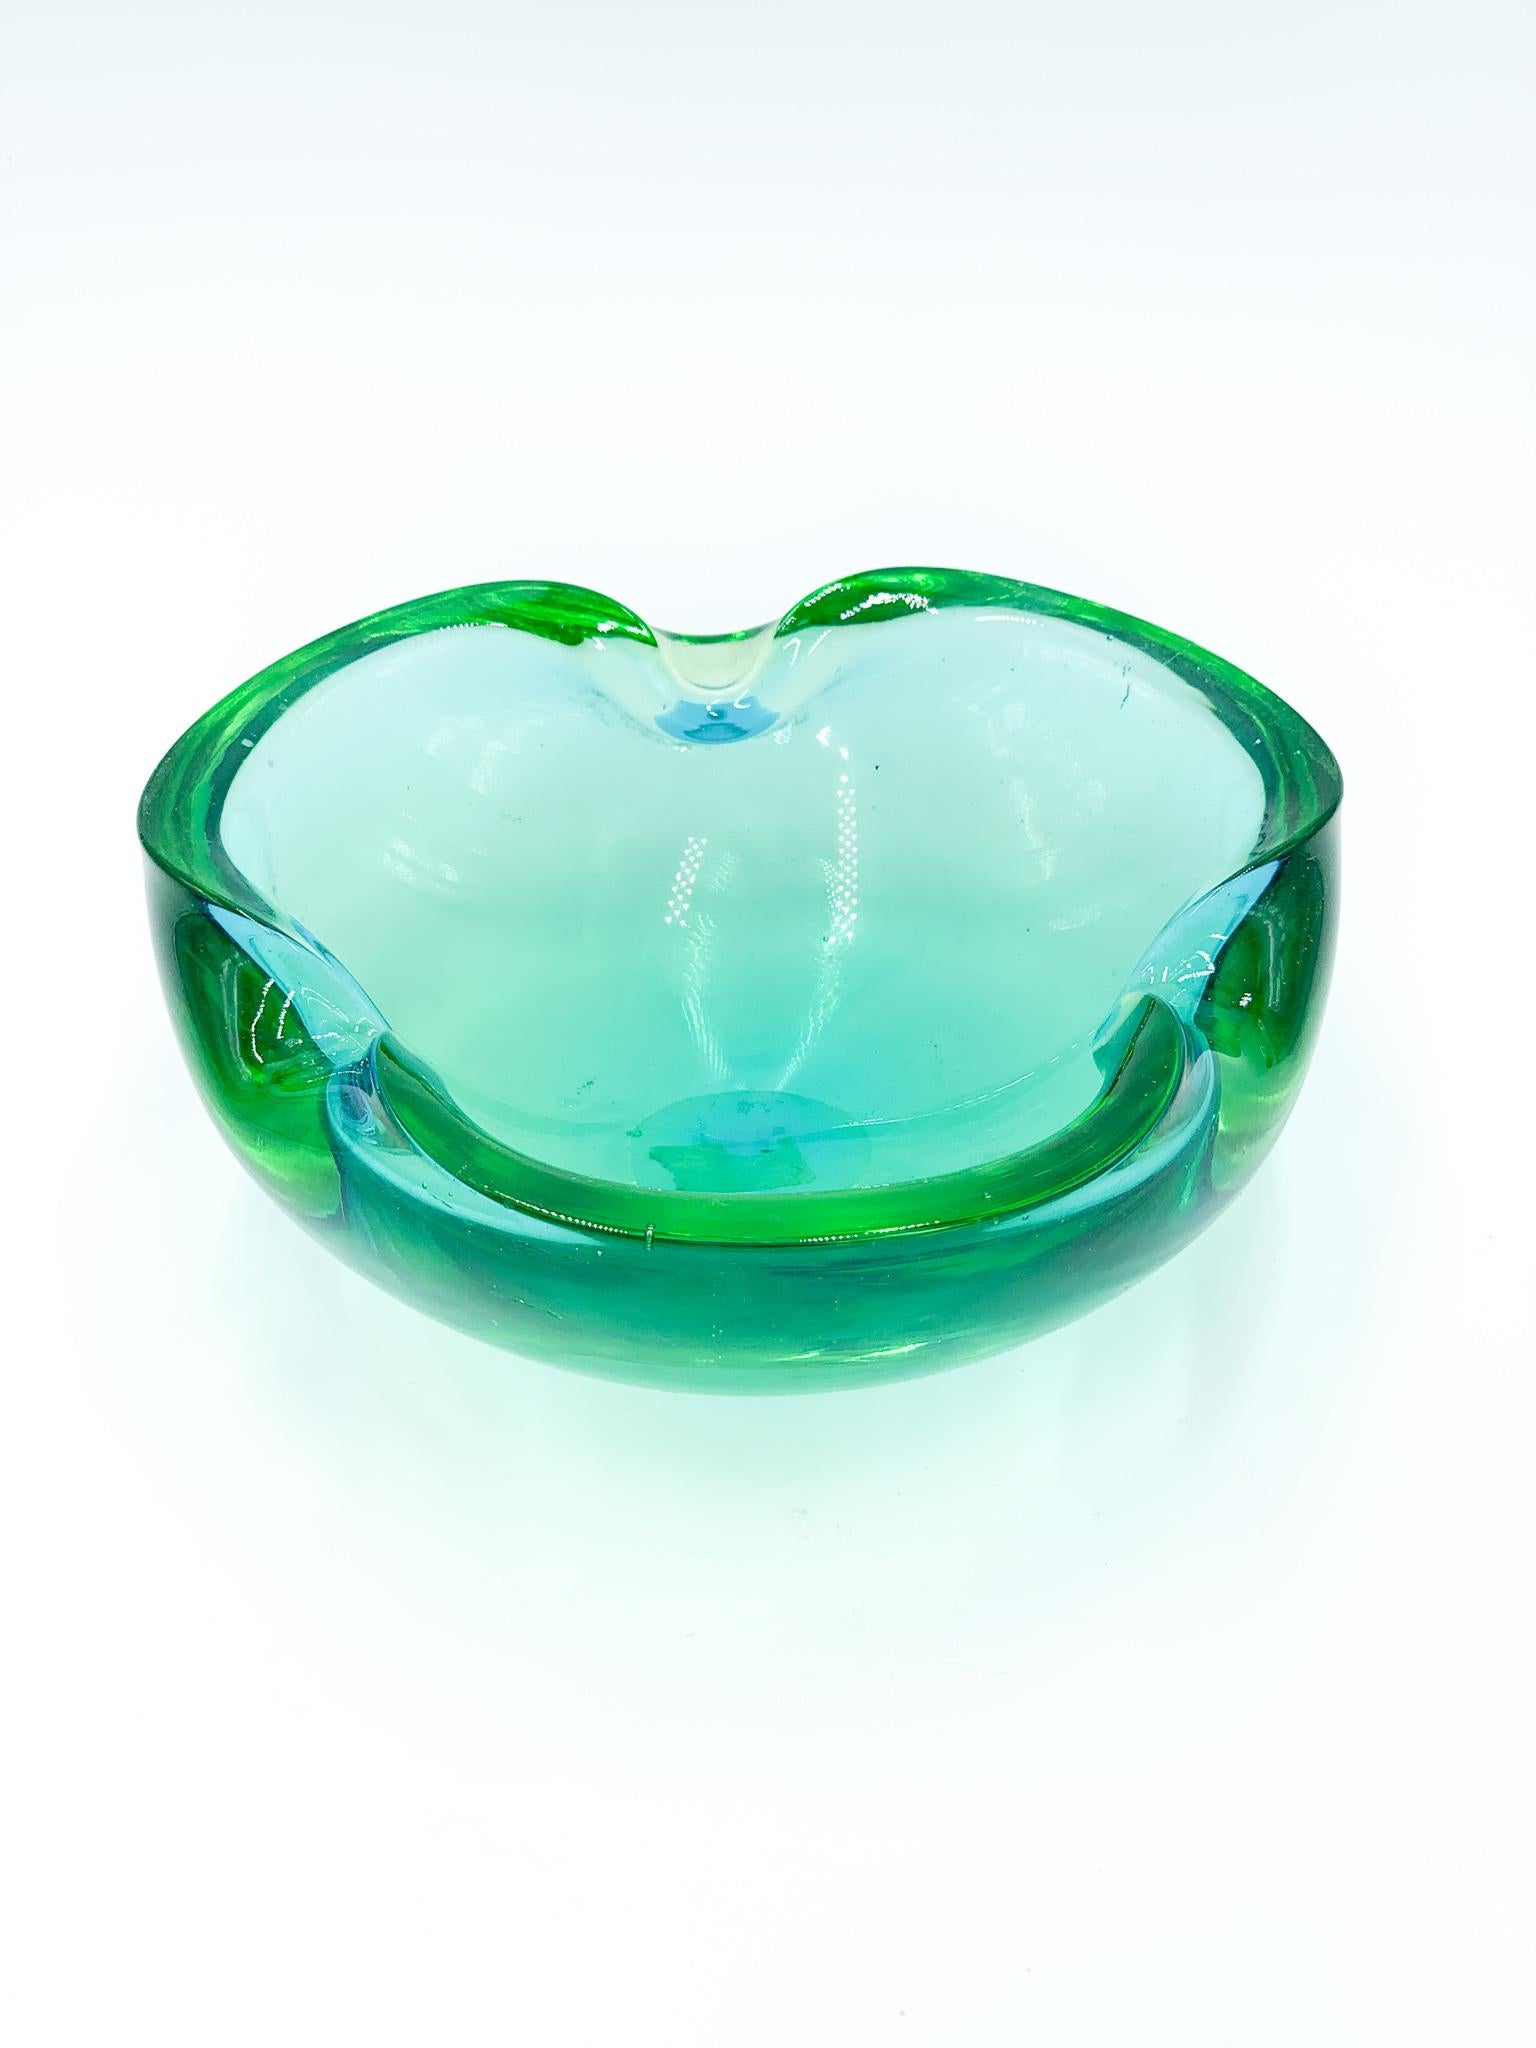 Italian Green Murano Glass Ashtray with Blue Shades by Flavio Poli 1960s For Sale